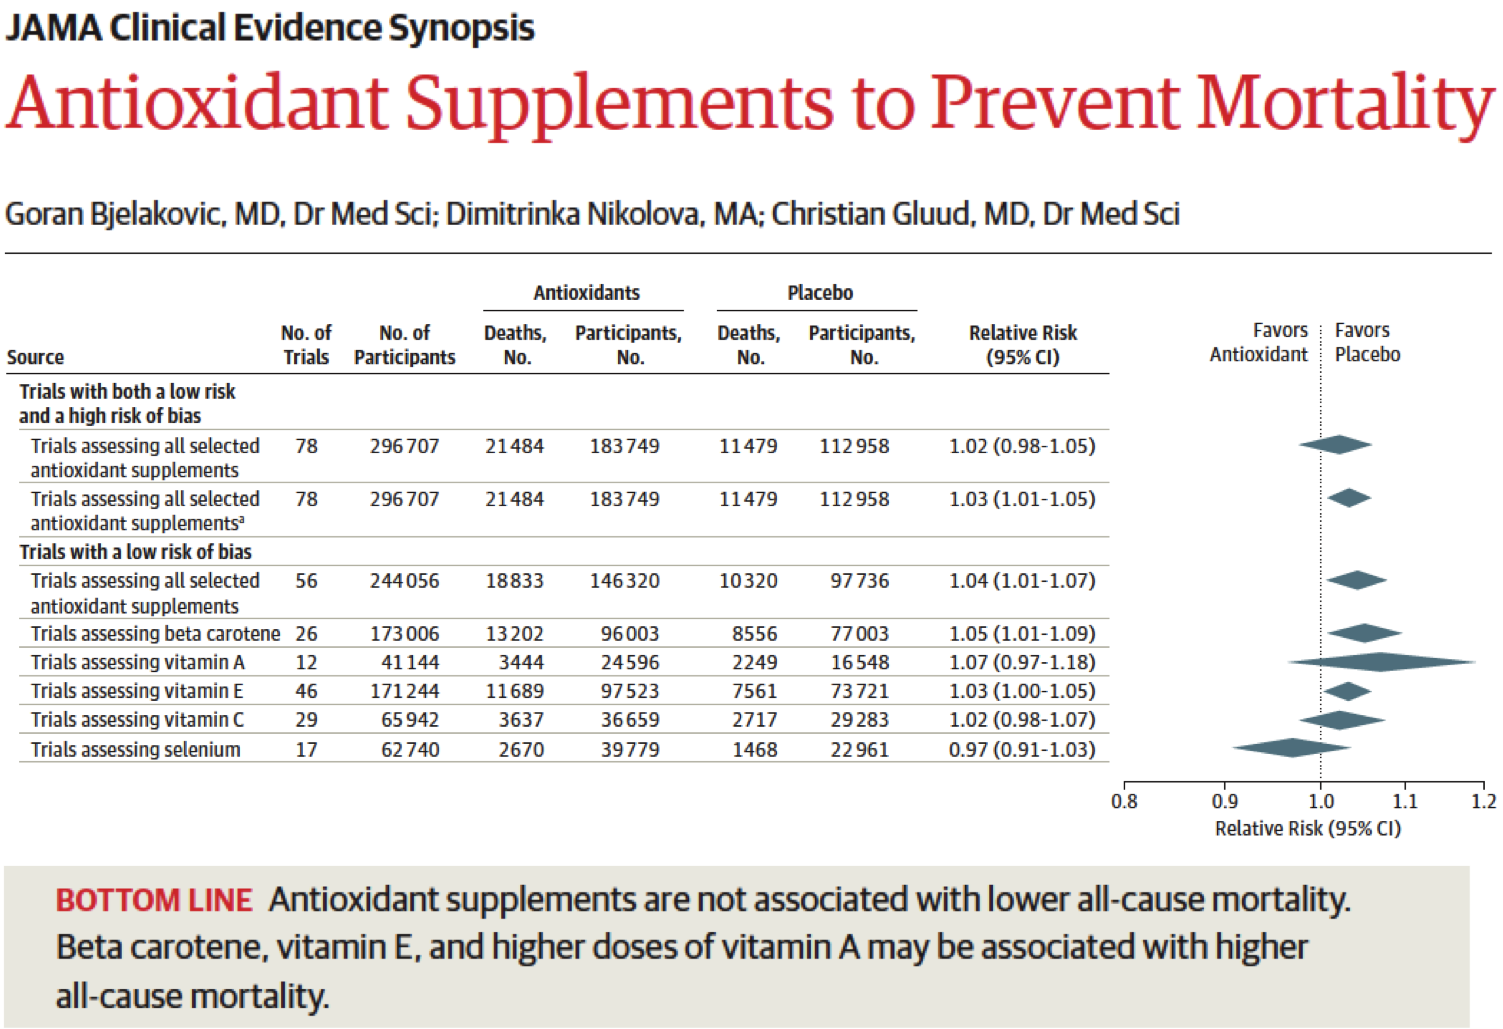 Antioxidant Use and Mortality